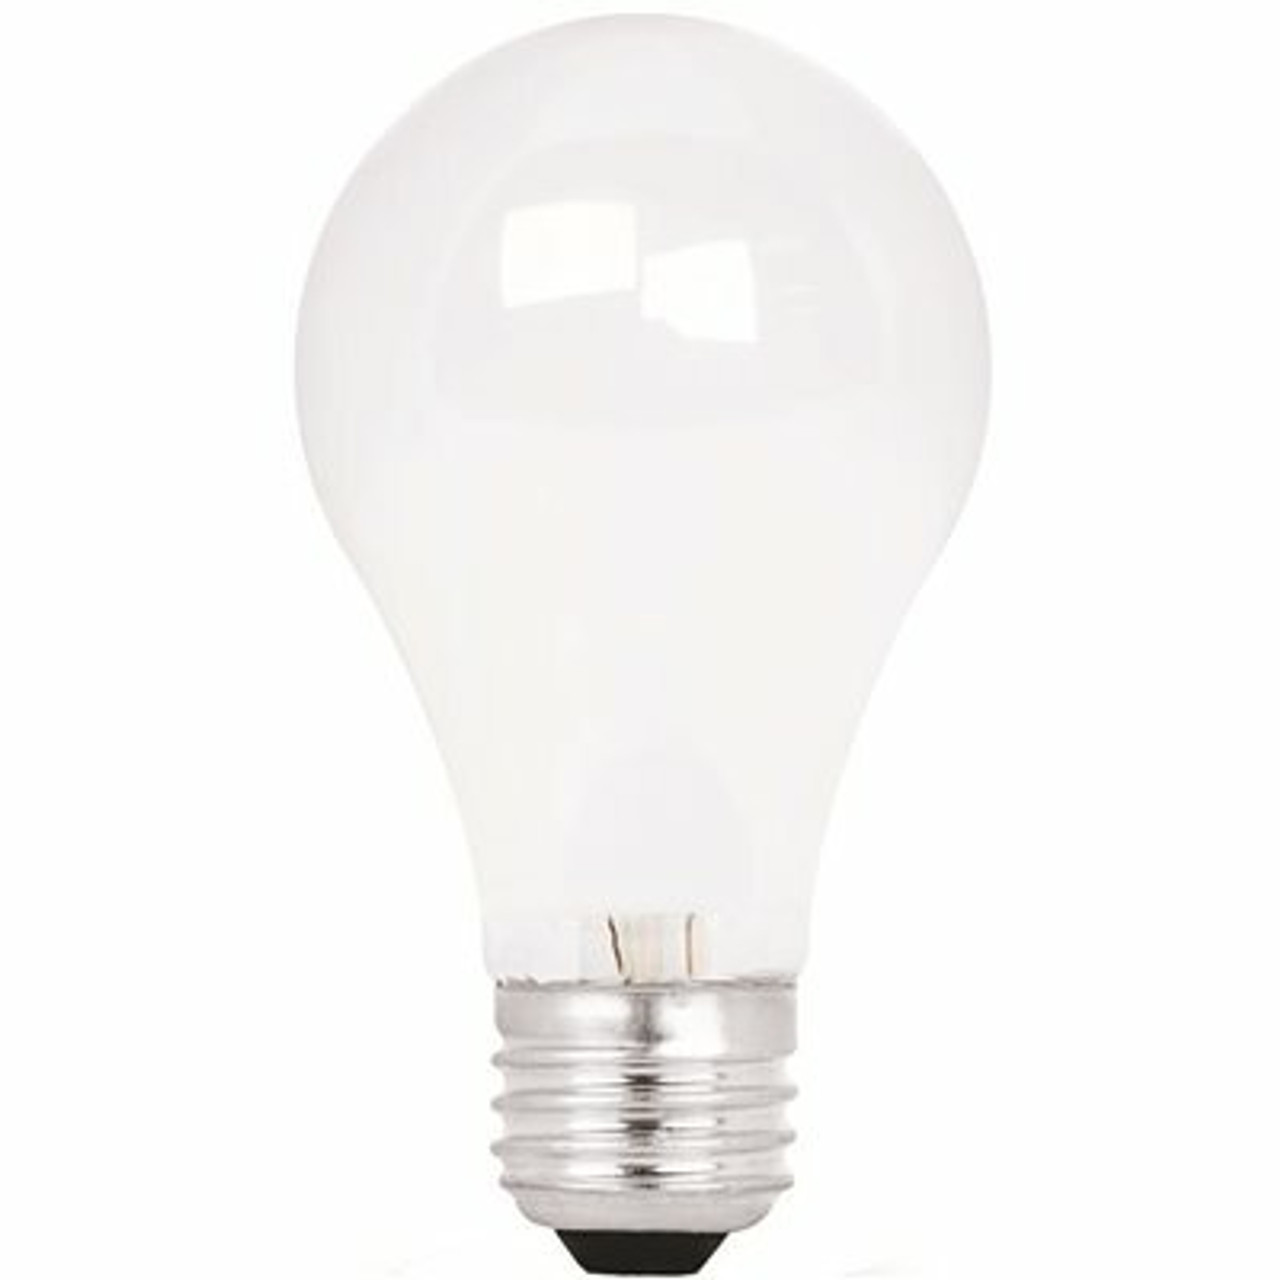 Feit Electric 43-Watt Warm White (3000K) A19 Dimmable Energy Saver Halogen Light Bulb (24-Pack)